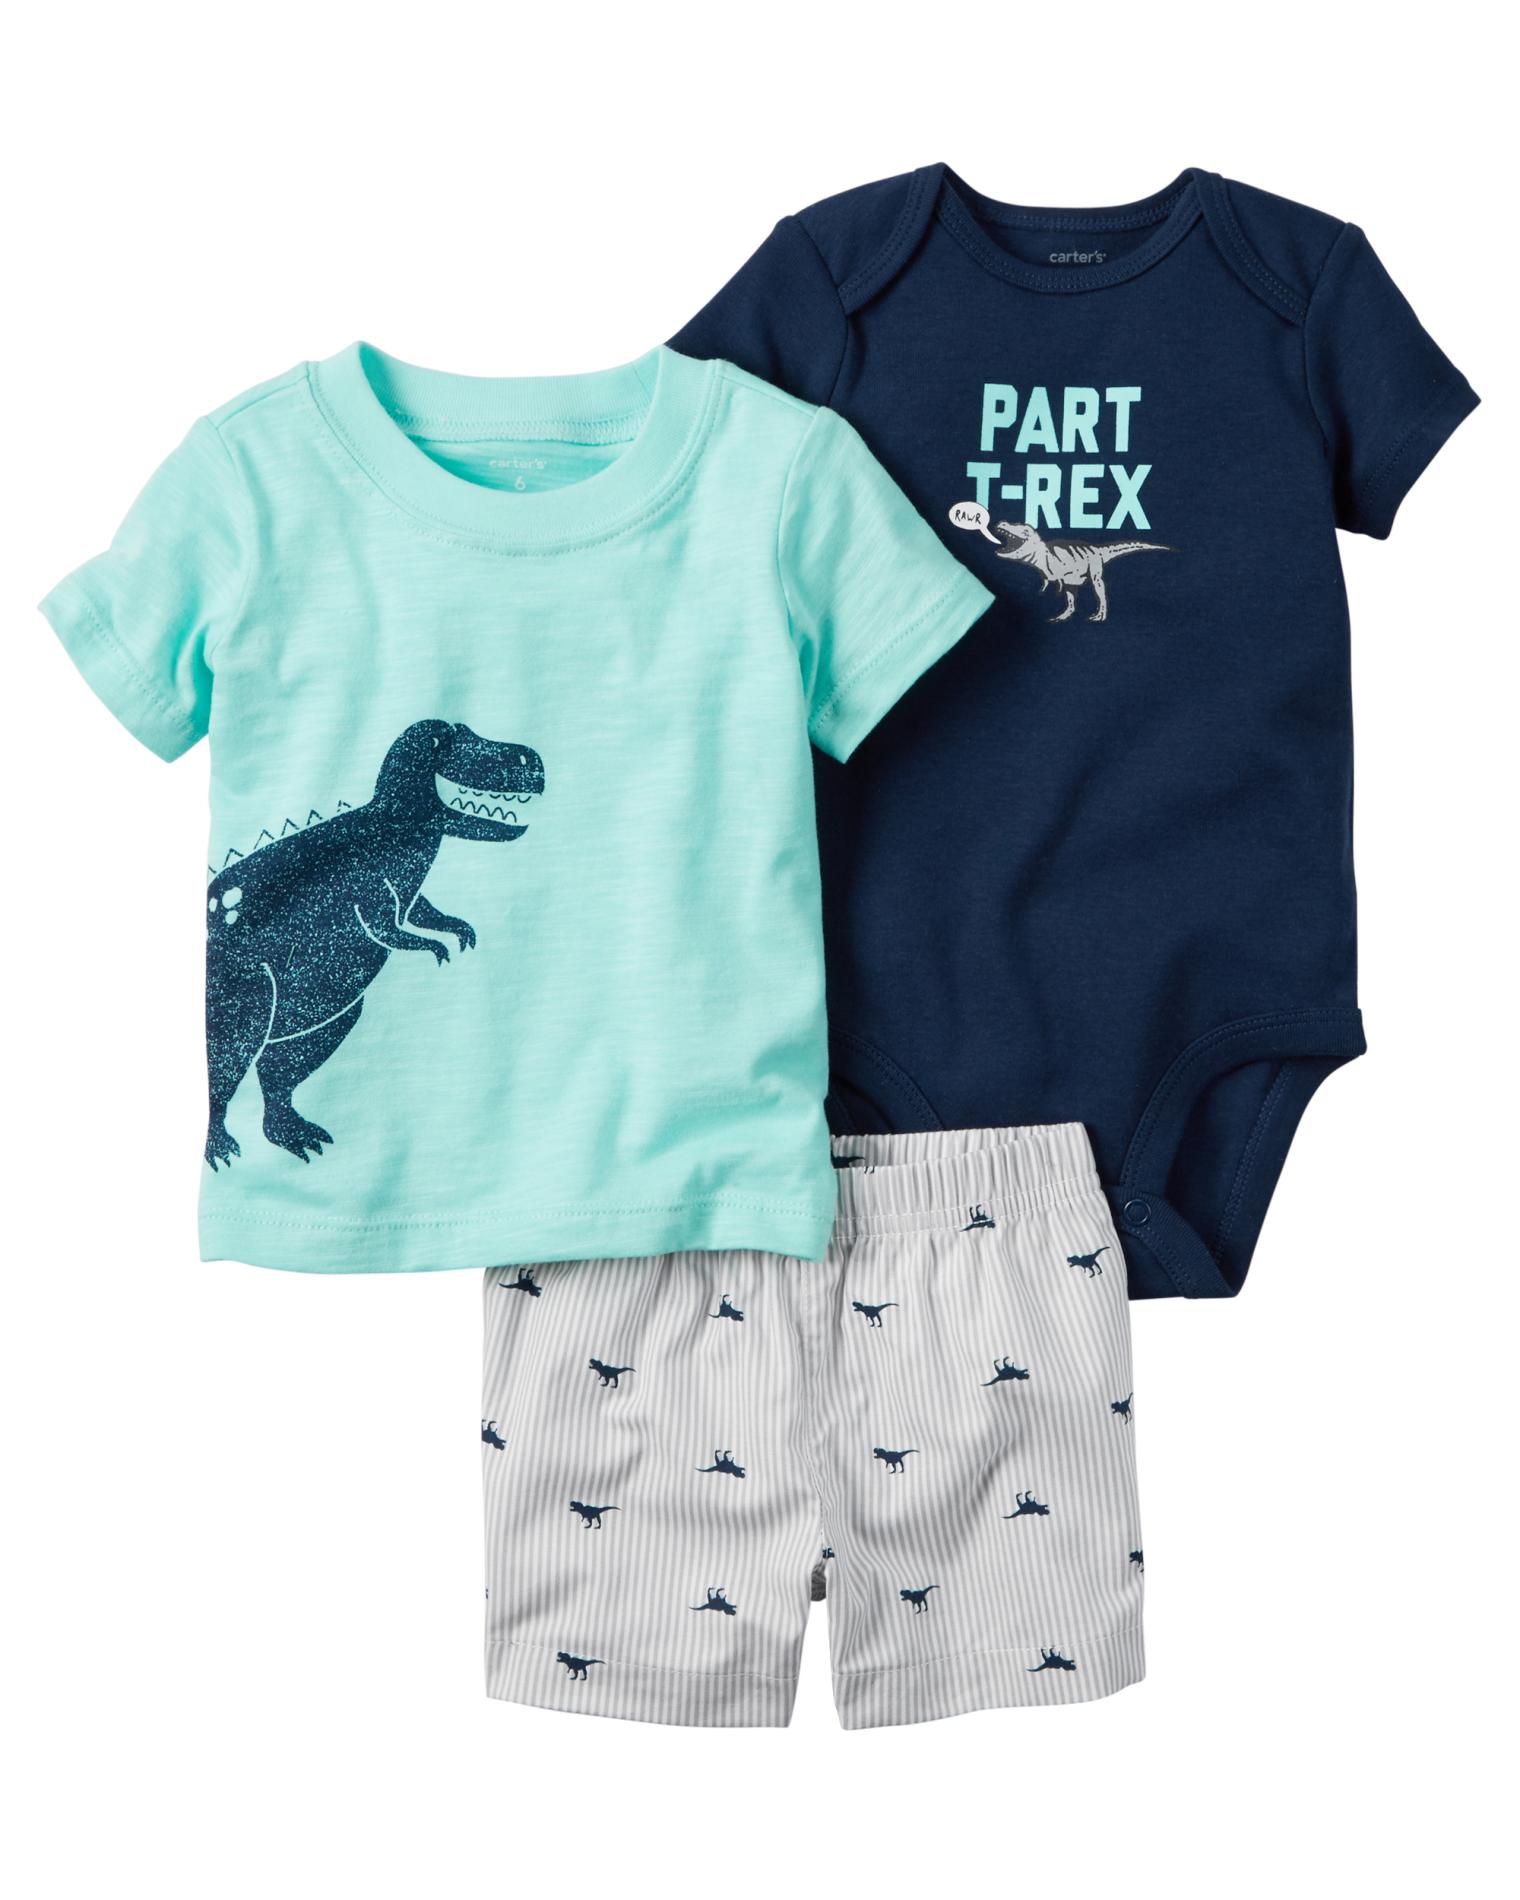 Carter's Newborn & Infant Boys' Bodysuit, T-Shirt & Shorts - Dinosaur